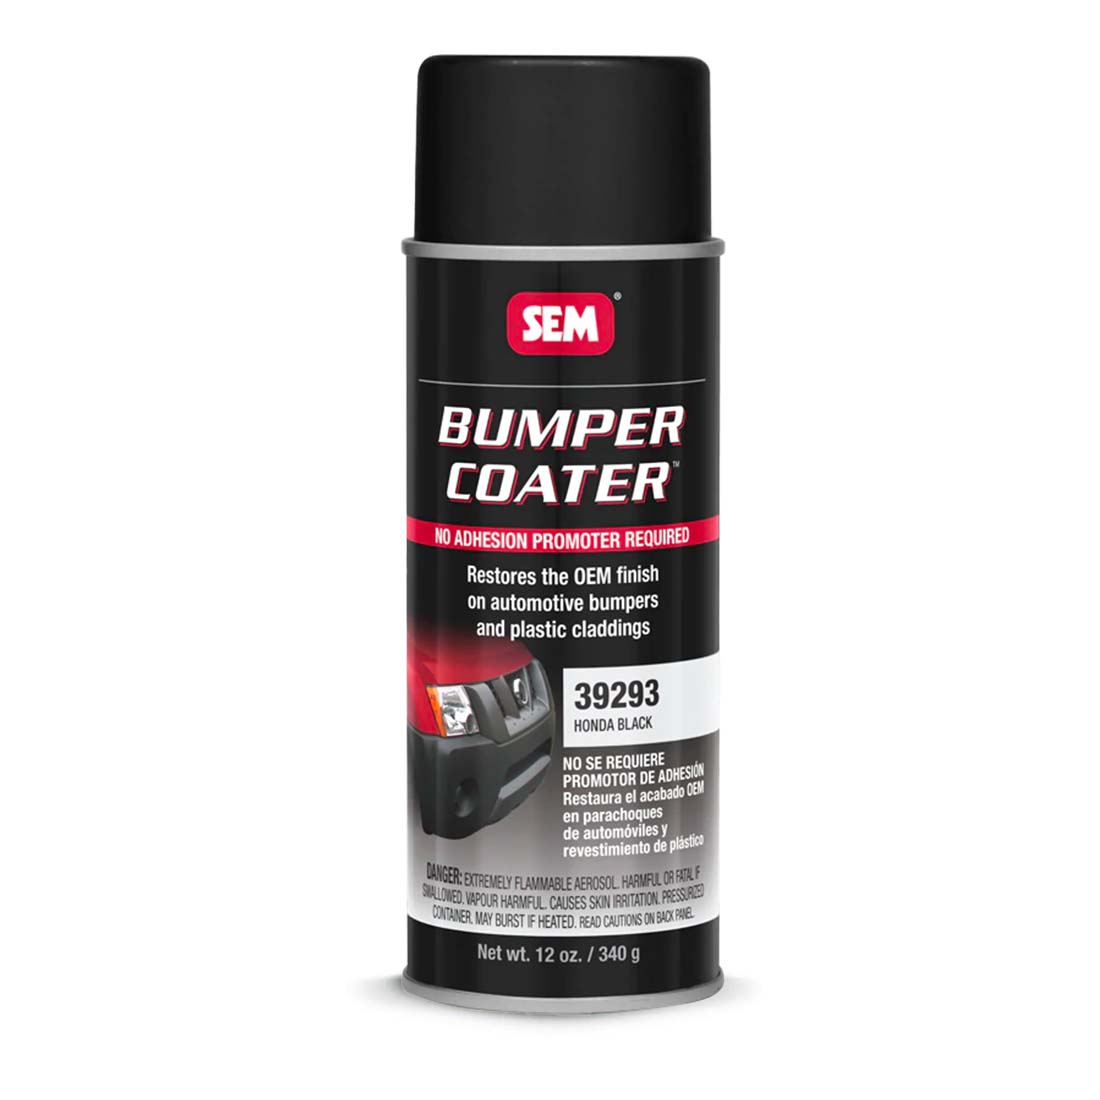 Honda Black (39293) Bumper Coater™ Trim Paint 